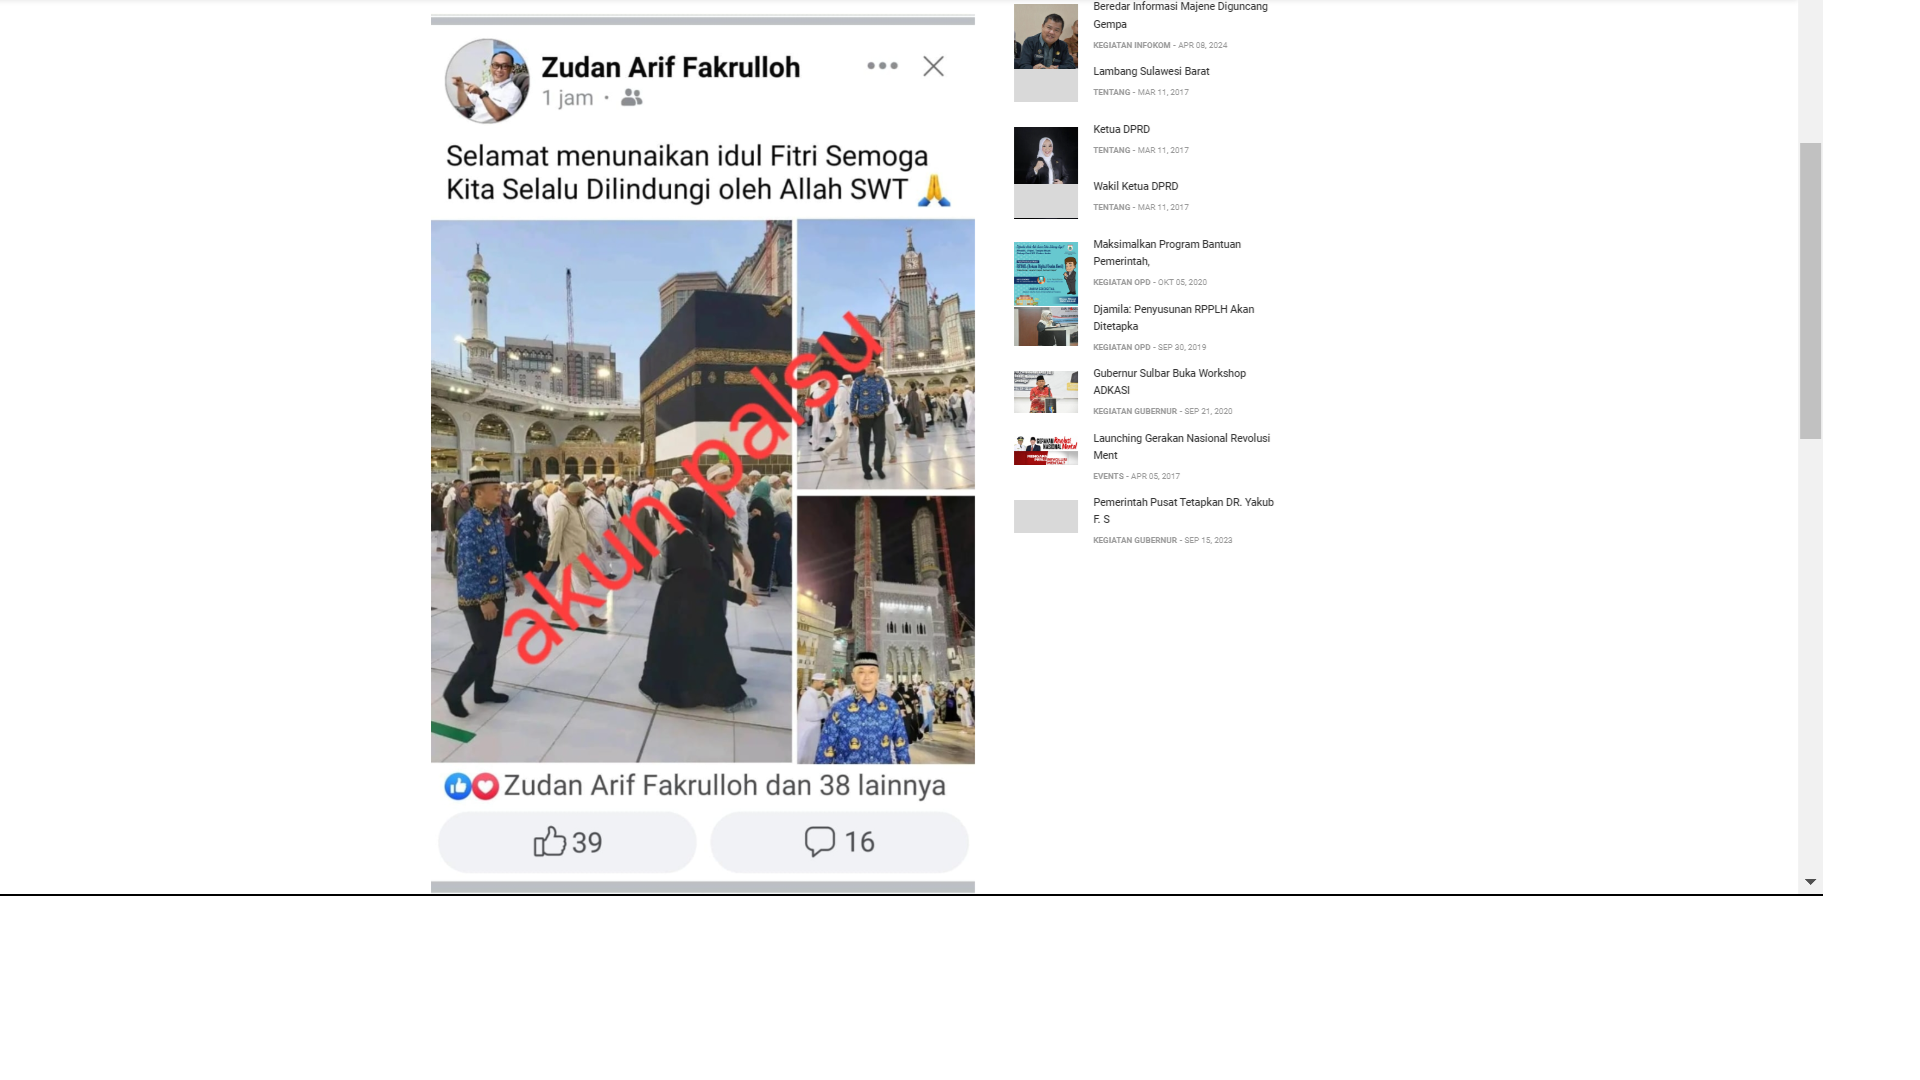 Kembali Ditemukan Akun FB Palsu Atas Namakan Zudan Arif Fakrulloh Masyarakat Diminta Berhati-hati